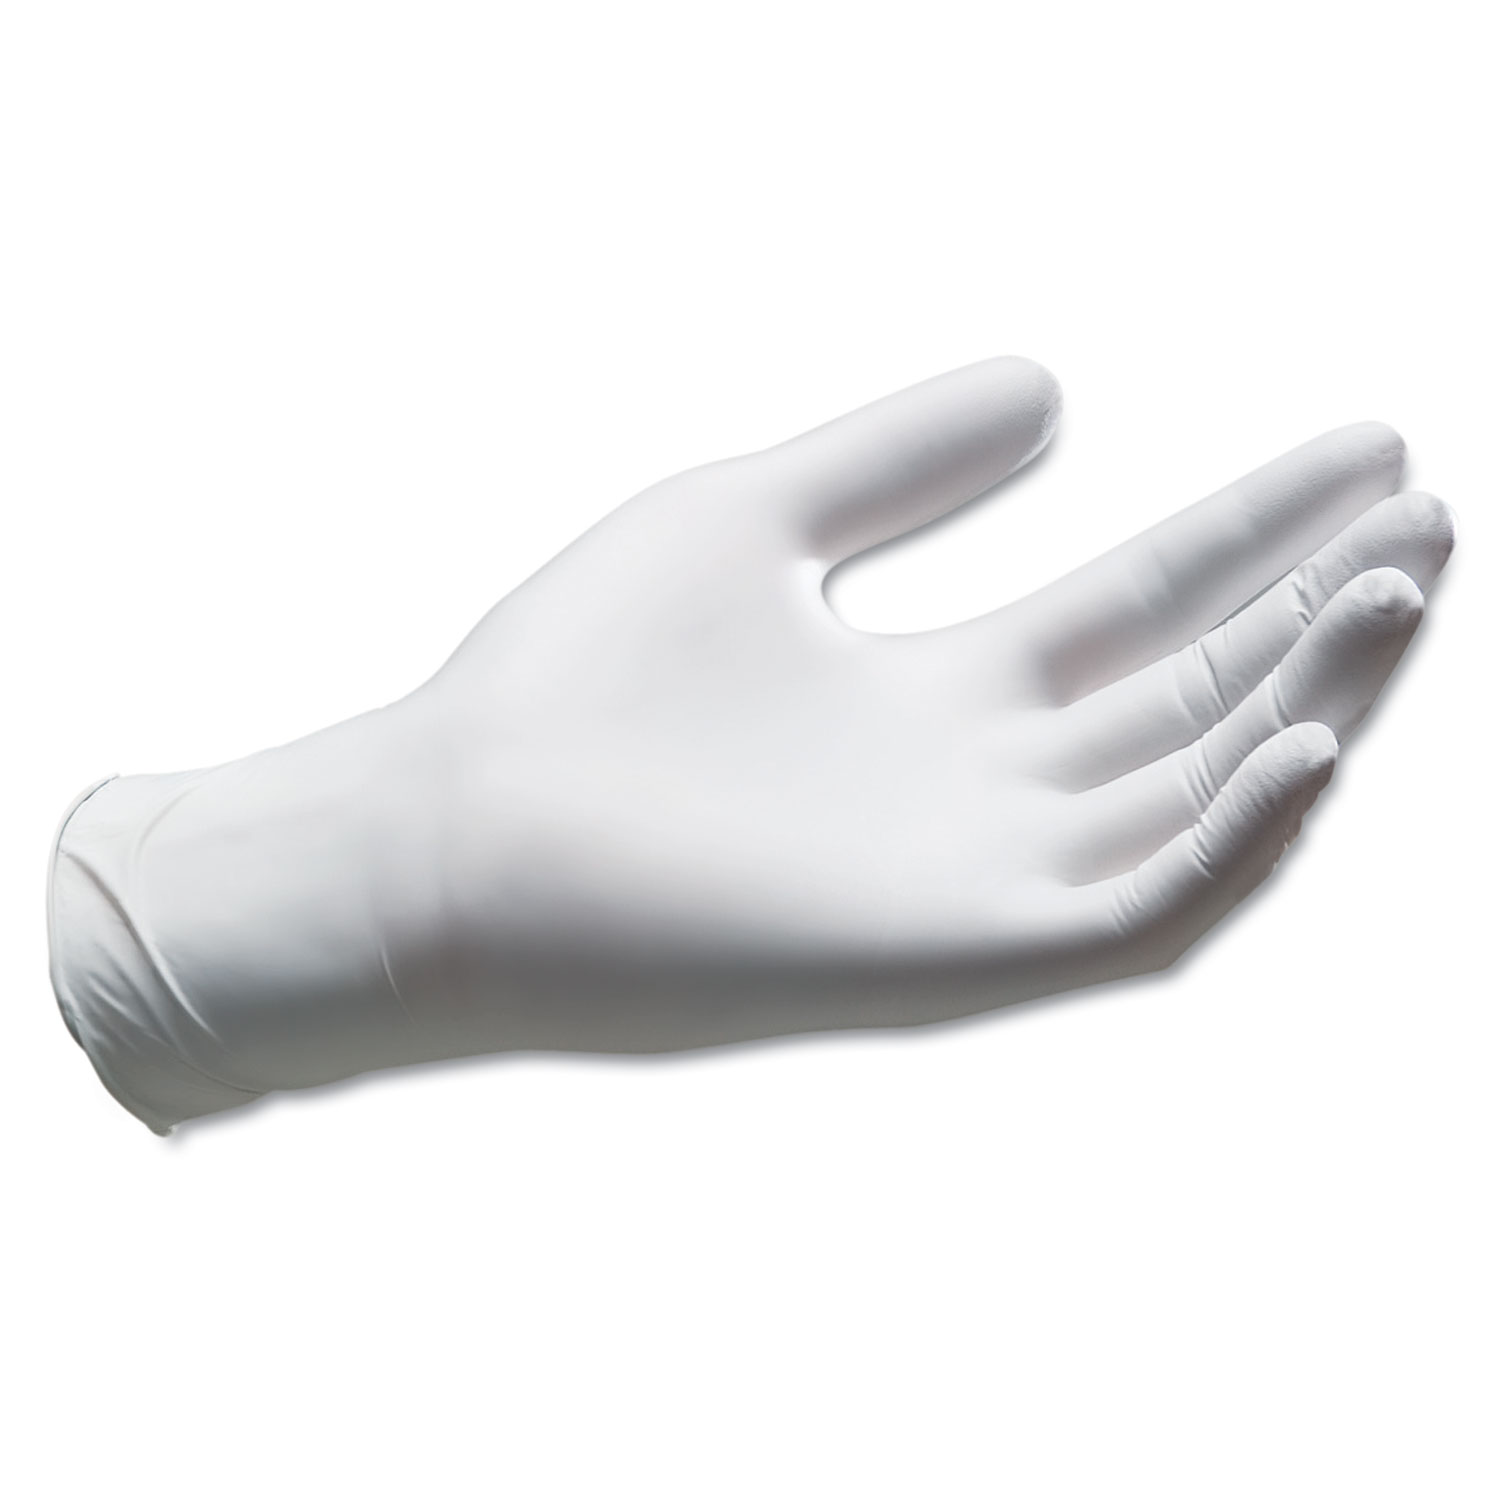  Kimberly-Clark Professional* 50707 STERLING Nitrile Exam Gloves, Powder-free, Gray, 242 mm Length, Medium, 200/Box (KCC50707) 